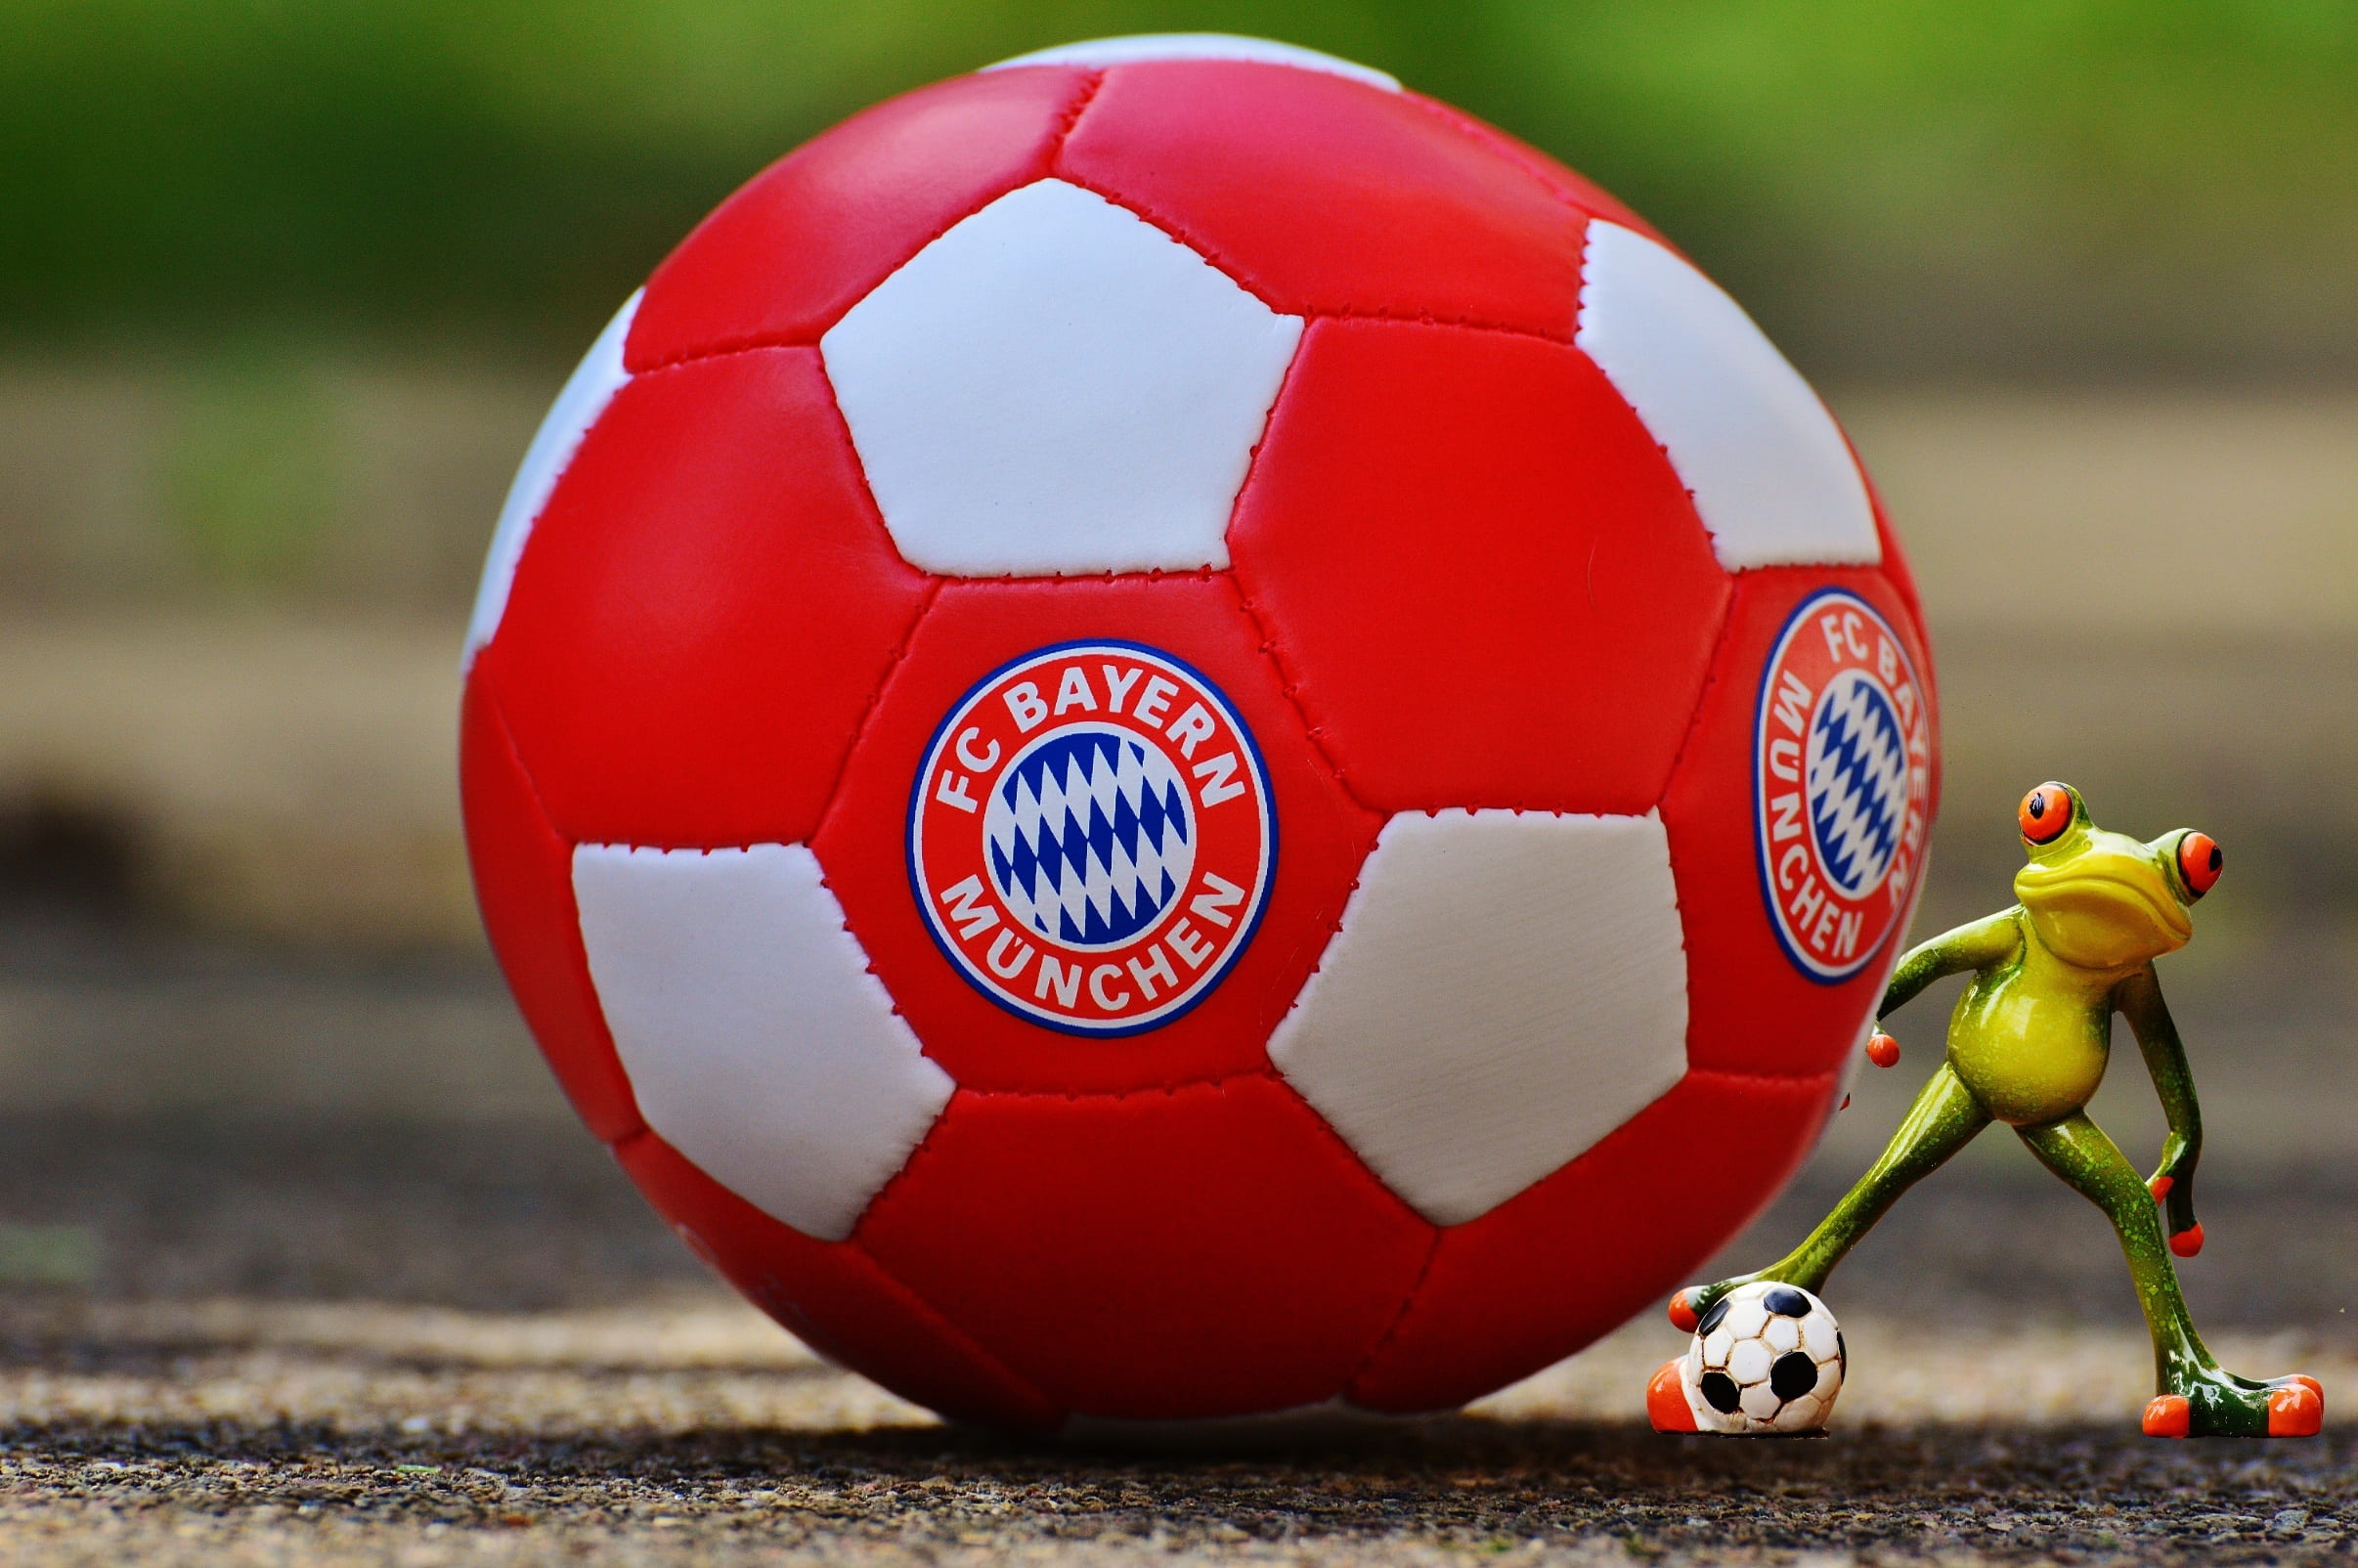 red and white FC Bayern Munchen football and frog figurine, bayern munich